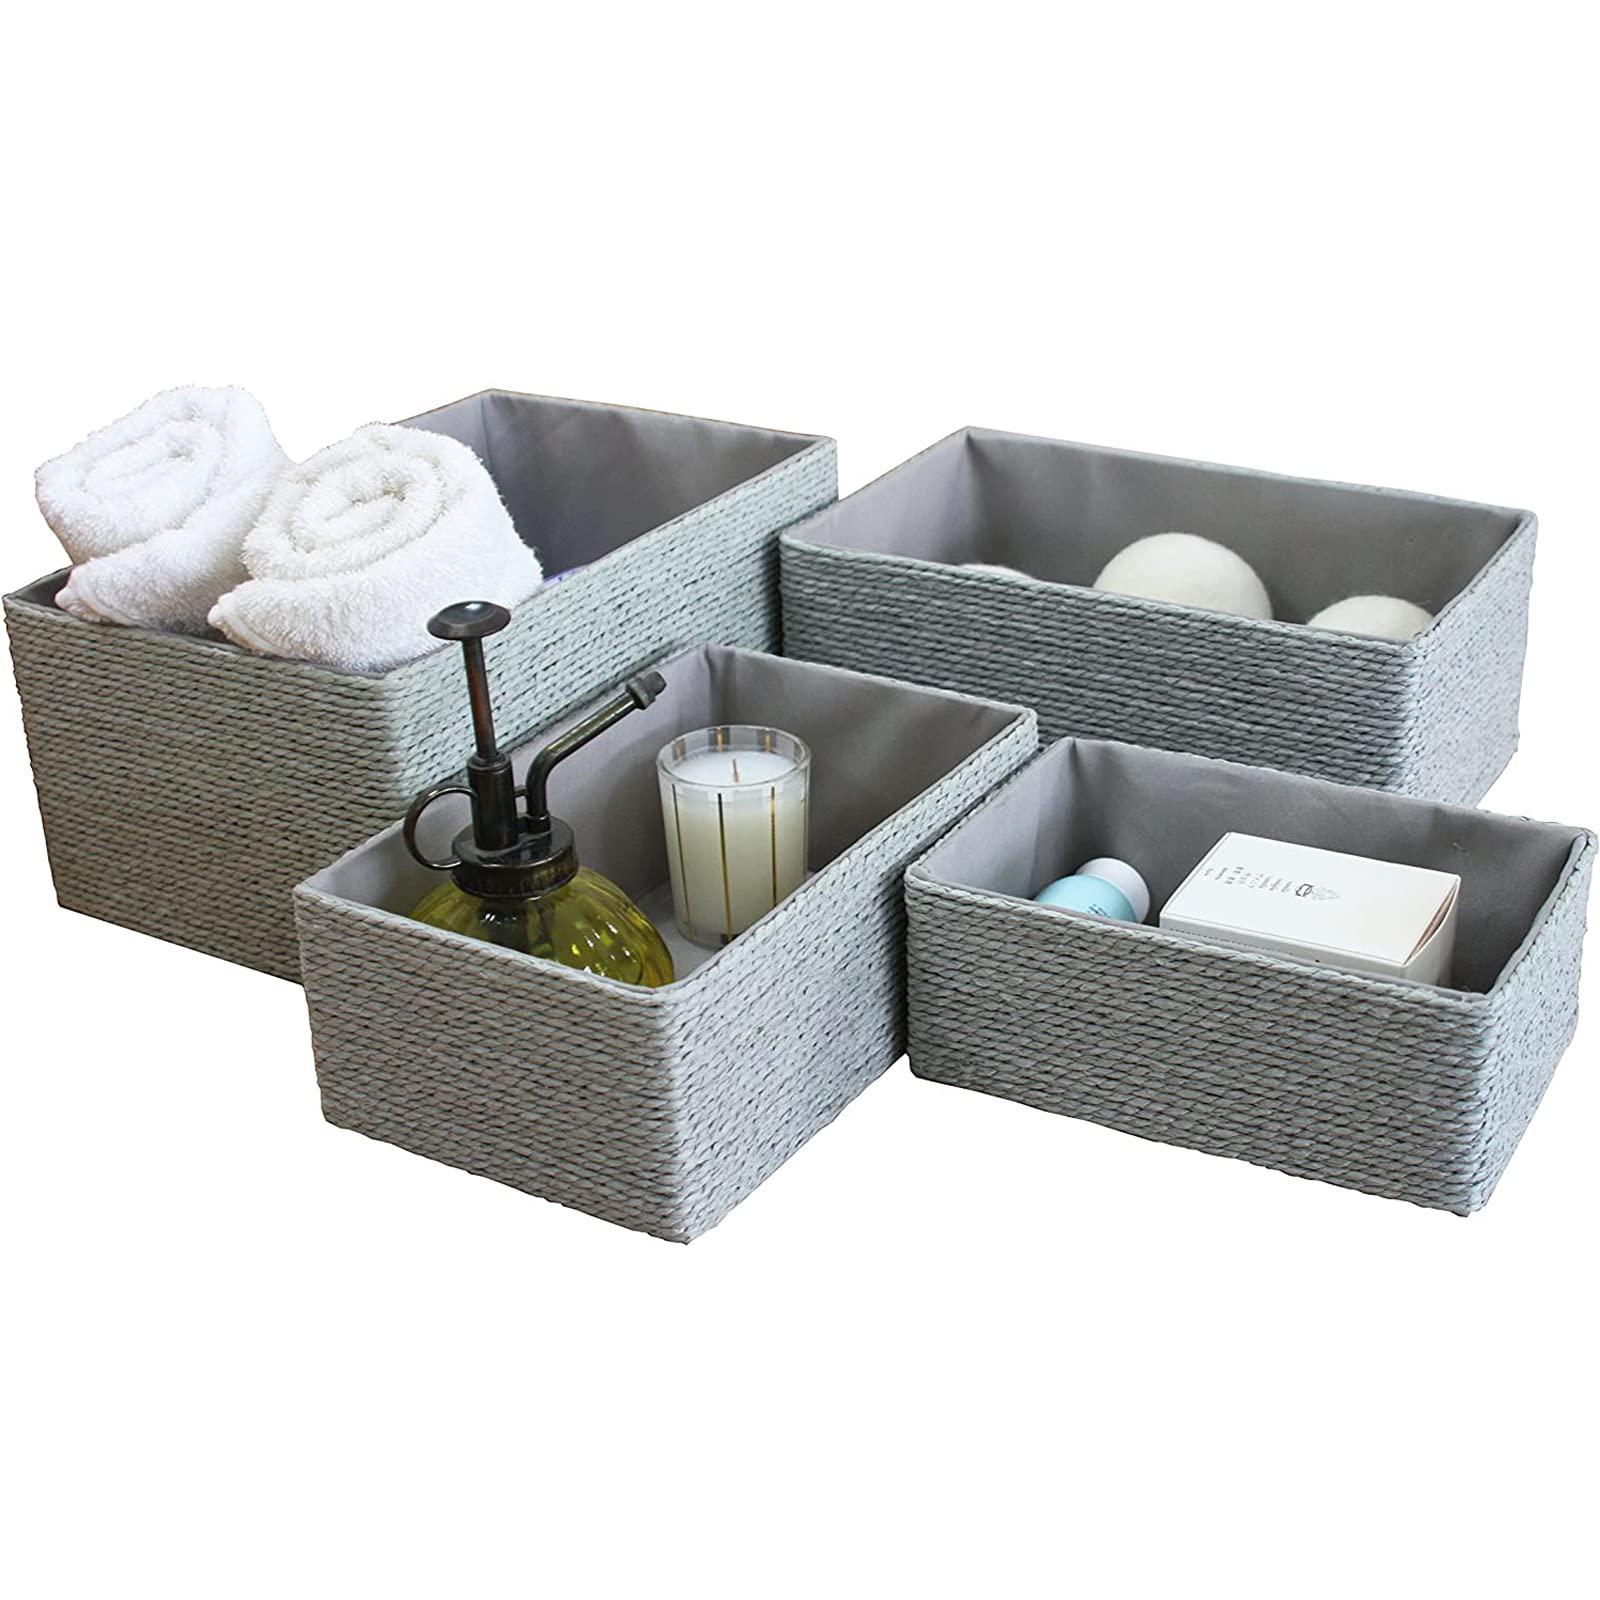 la jolie muse storage baskets set 4 - stackable woven basket paper rope bin, storage boxes for makeup closet bathroom bedroom